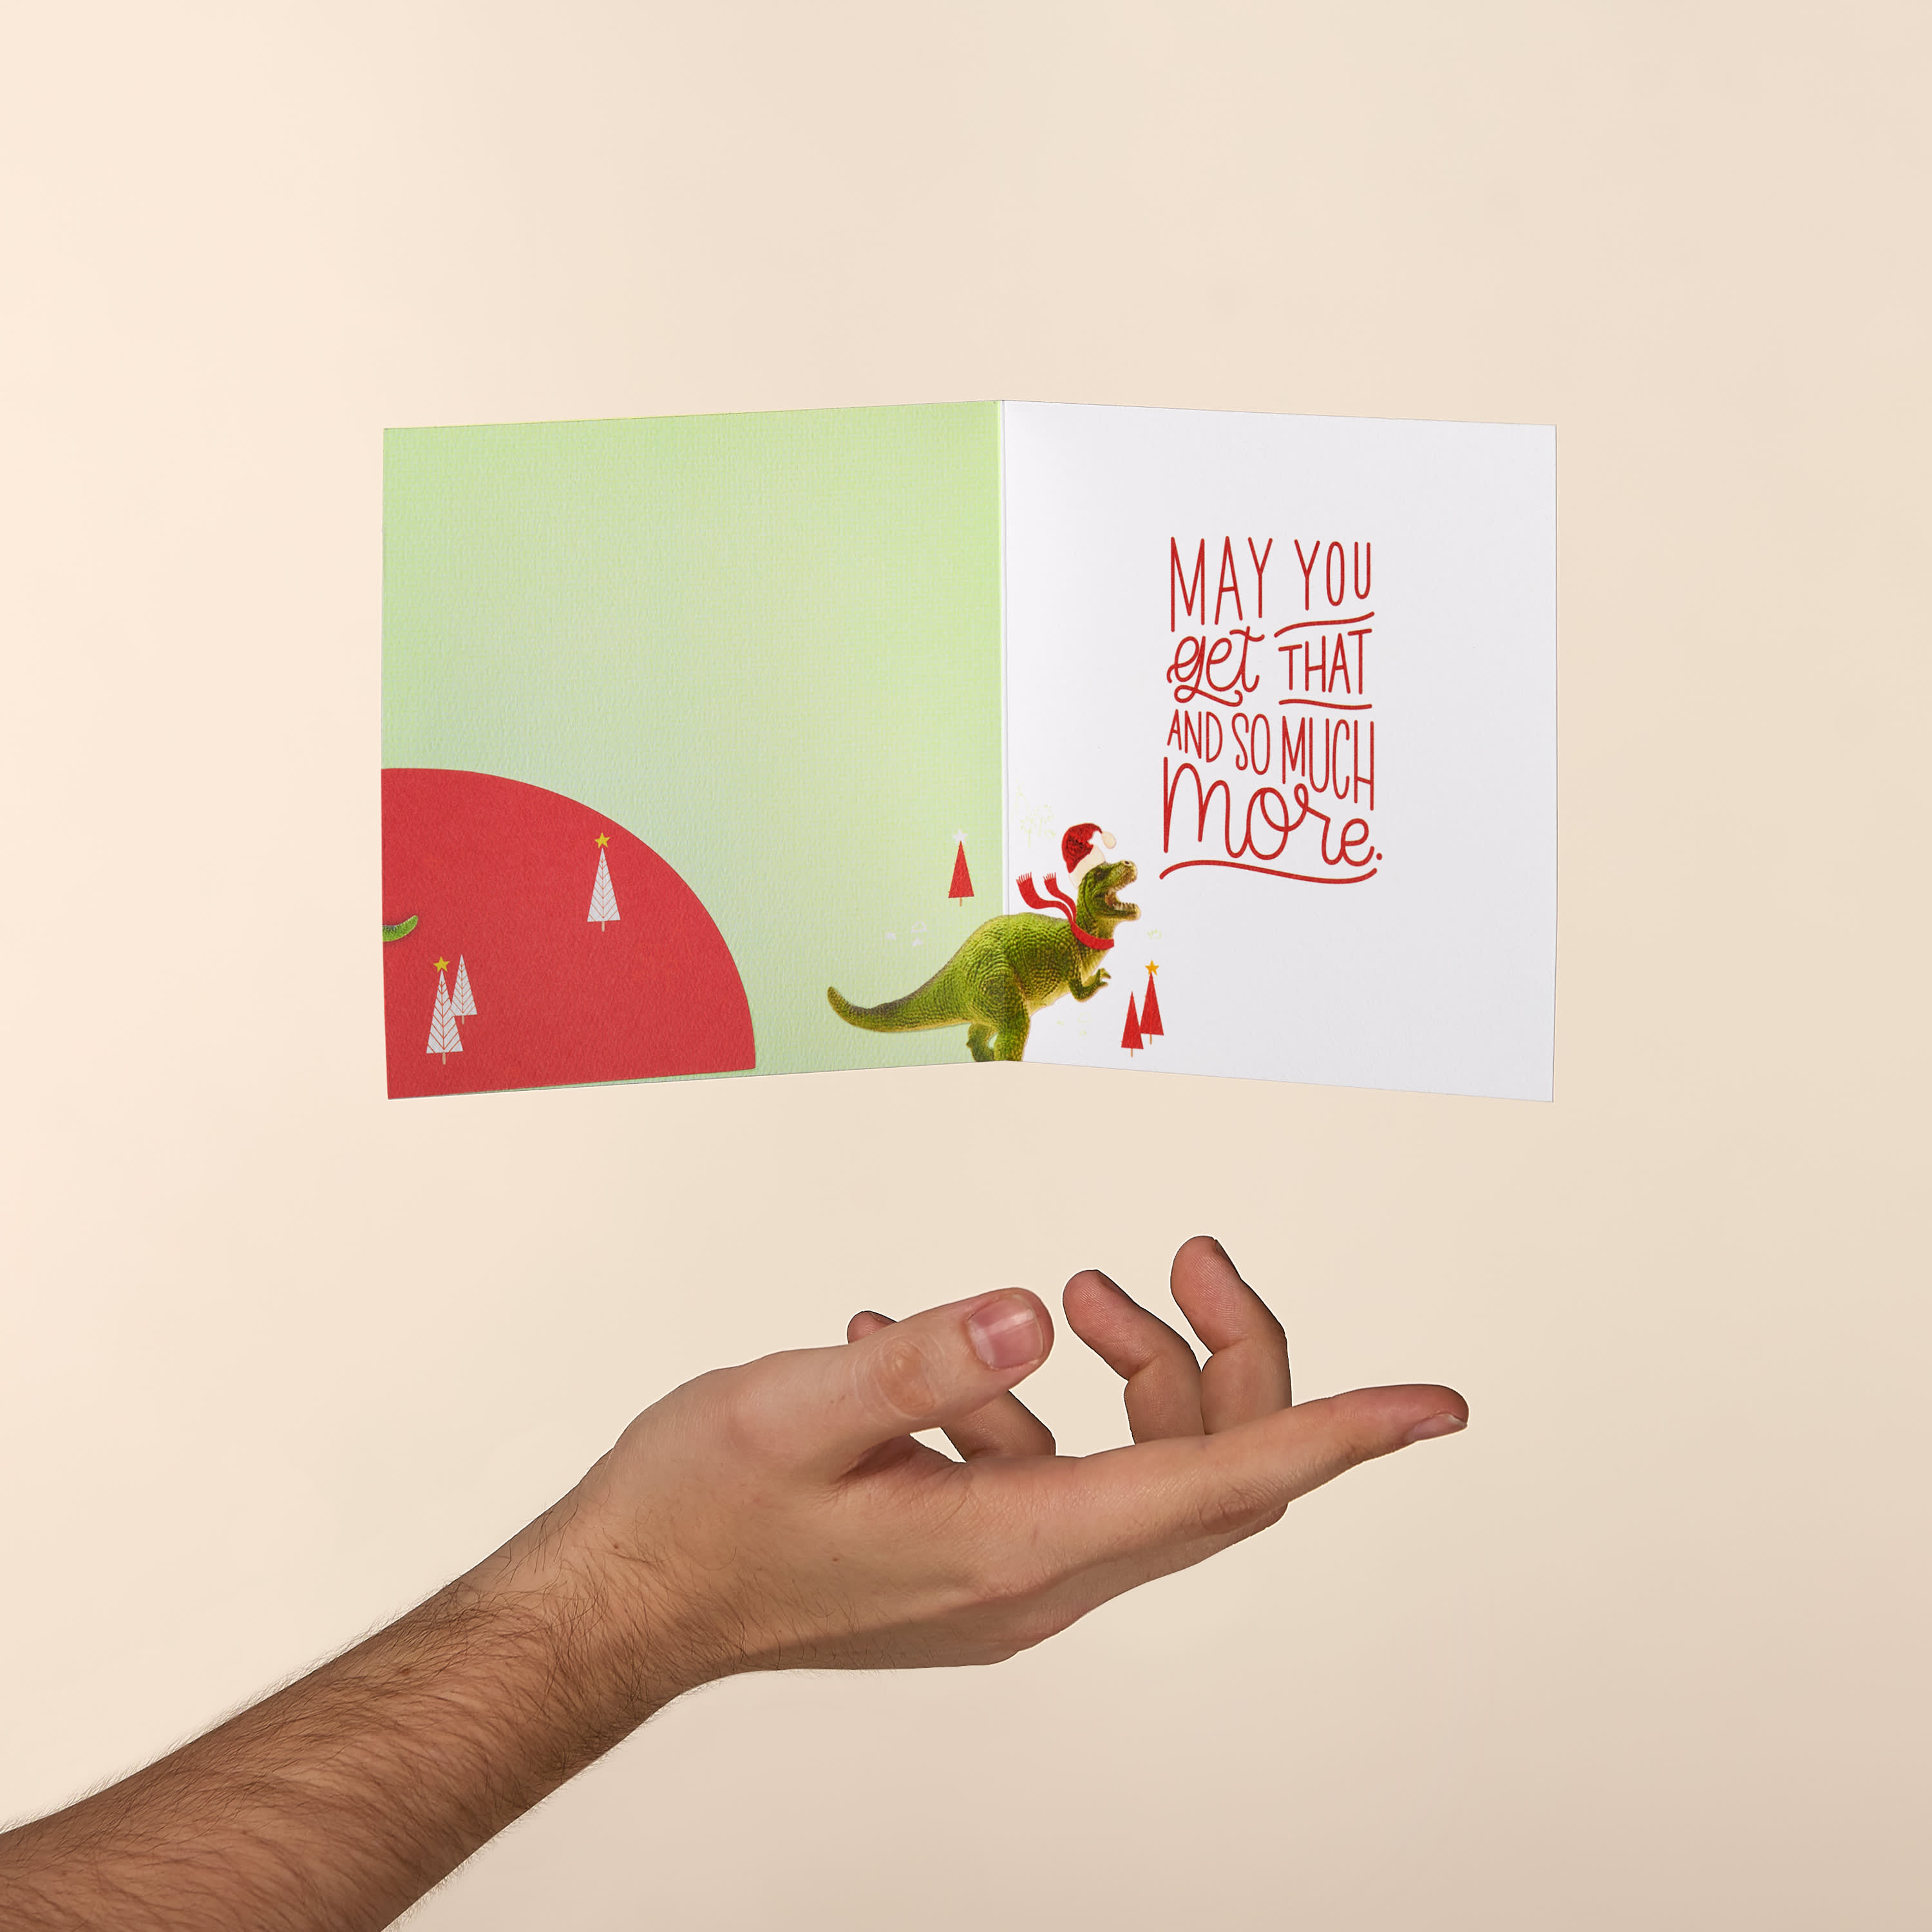 Dinosaur Money and Gift Card Holder Greeting Card - Christmas, Happy Holidays image